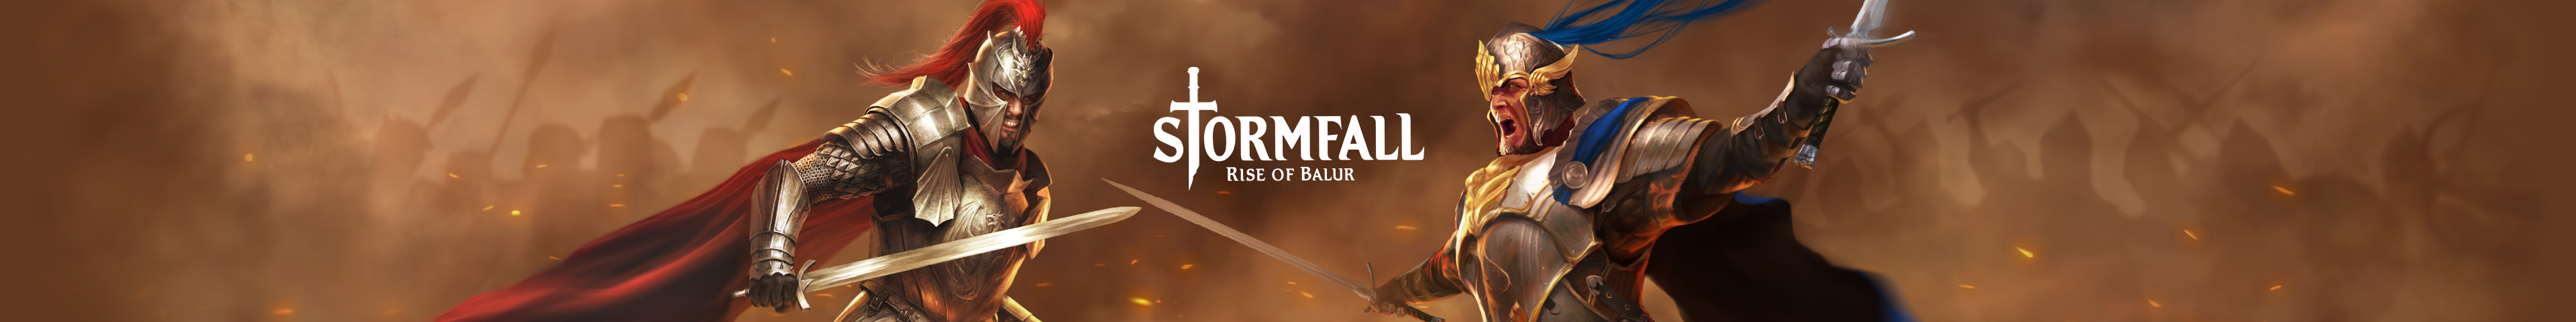 Stormfall: Rise of Balur Forum